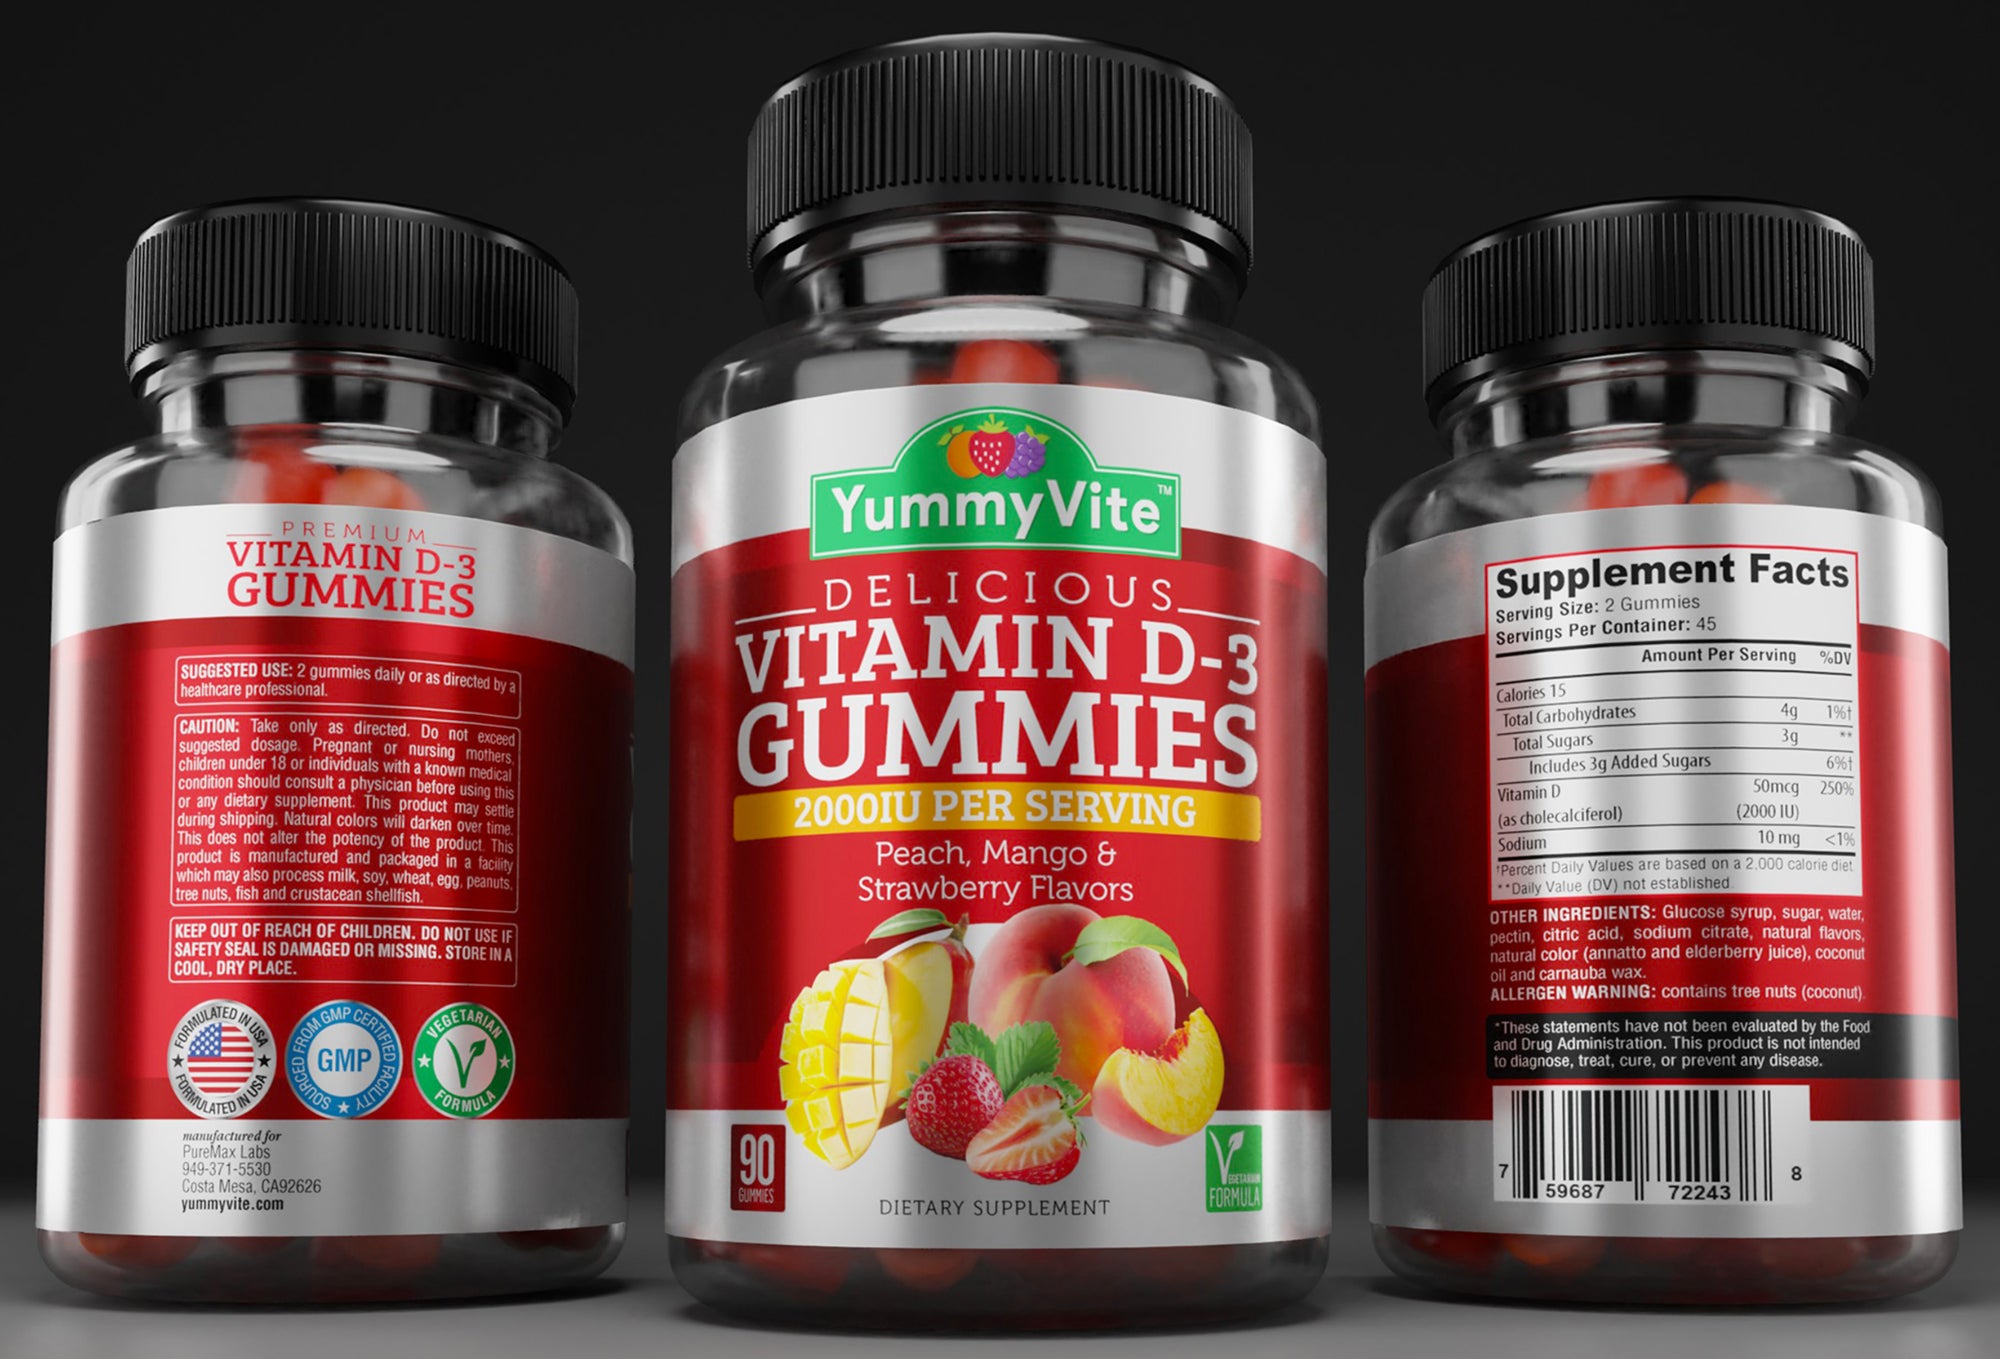 YummyVite Vitamin D3 Gummies, Immune Support, Delicious Peach, Mango, Strawberry Flavor, 90 Gummies